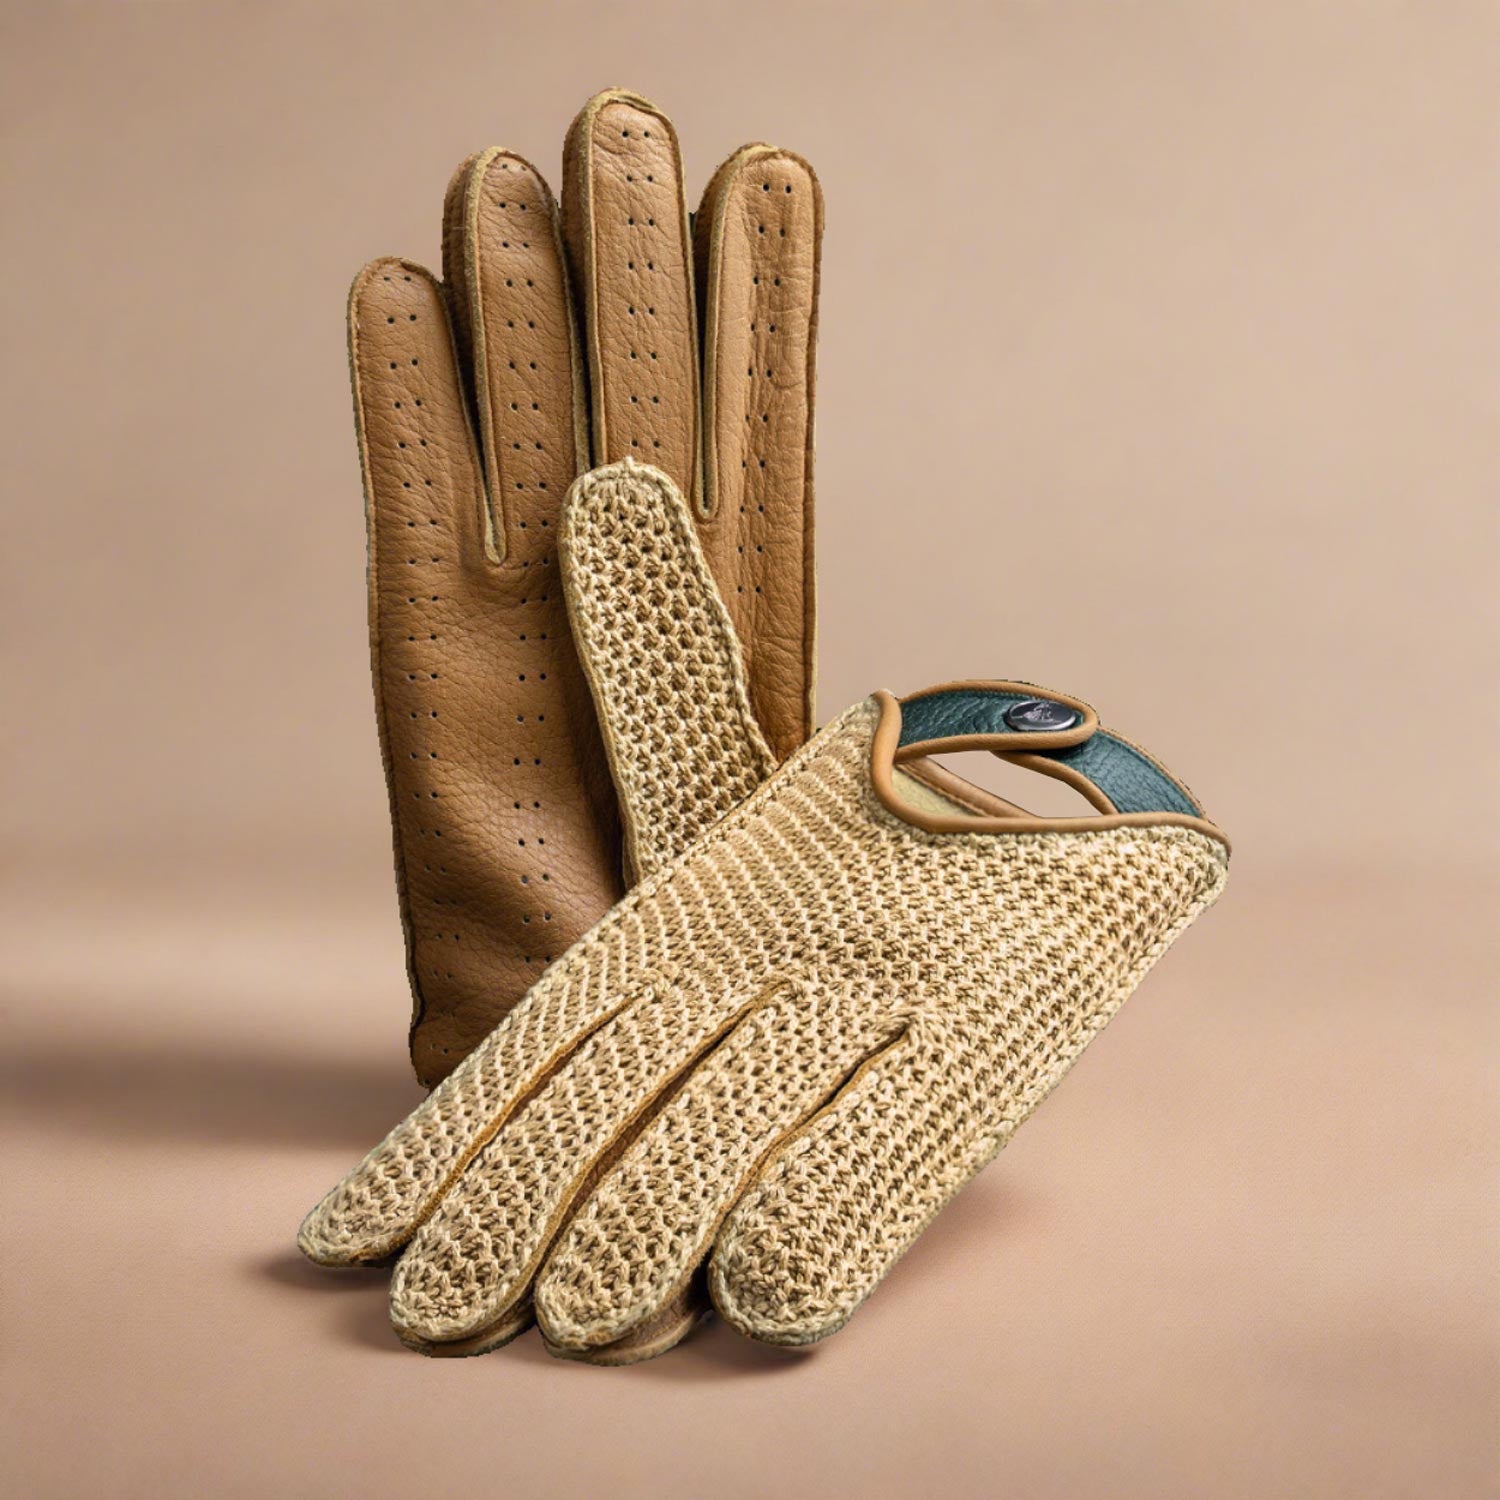 Crochet Grand Prix driving gloves